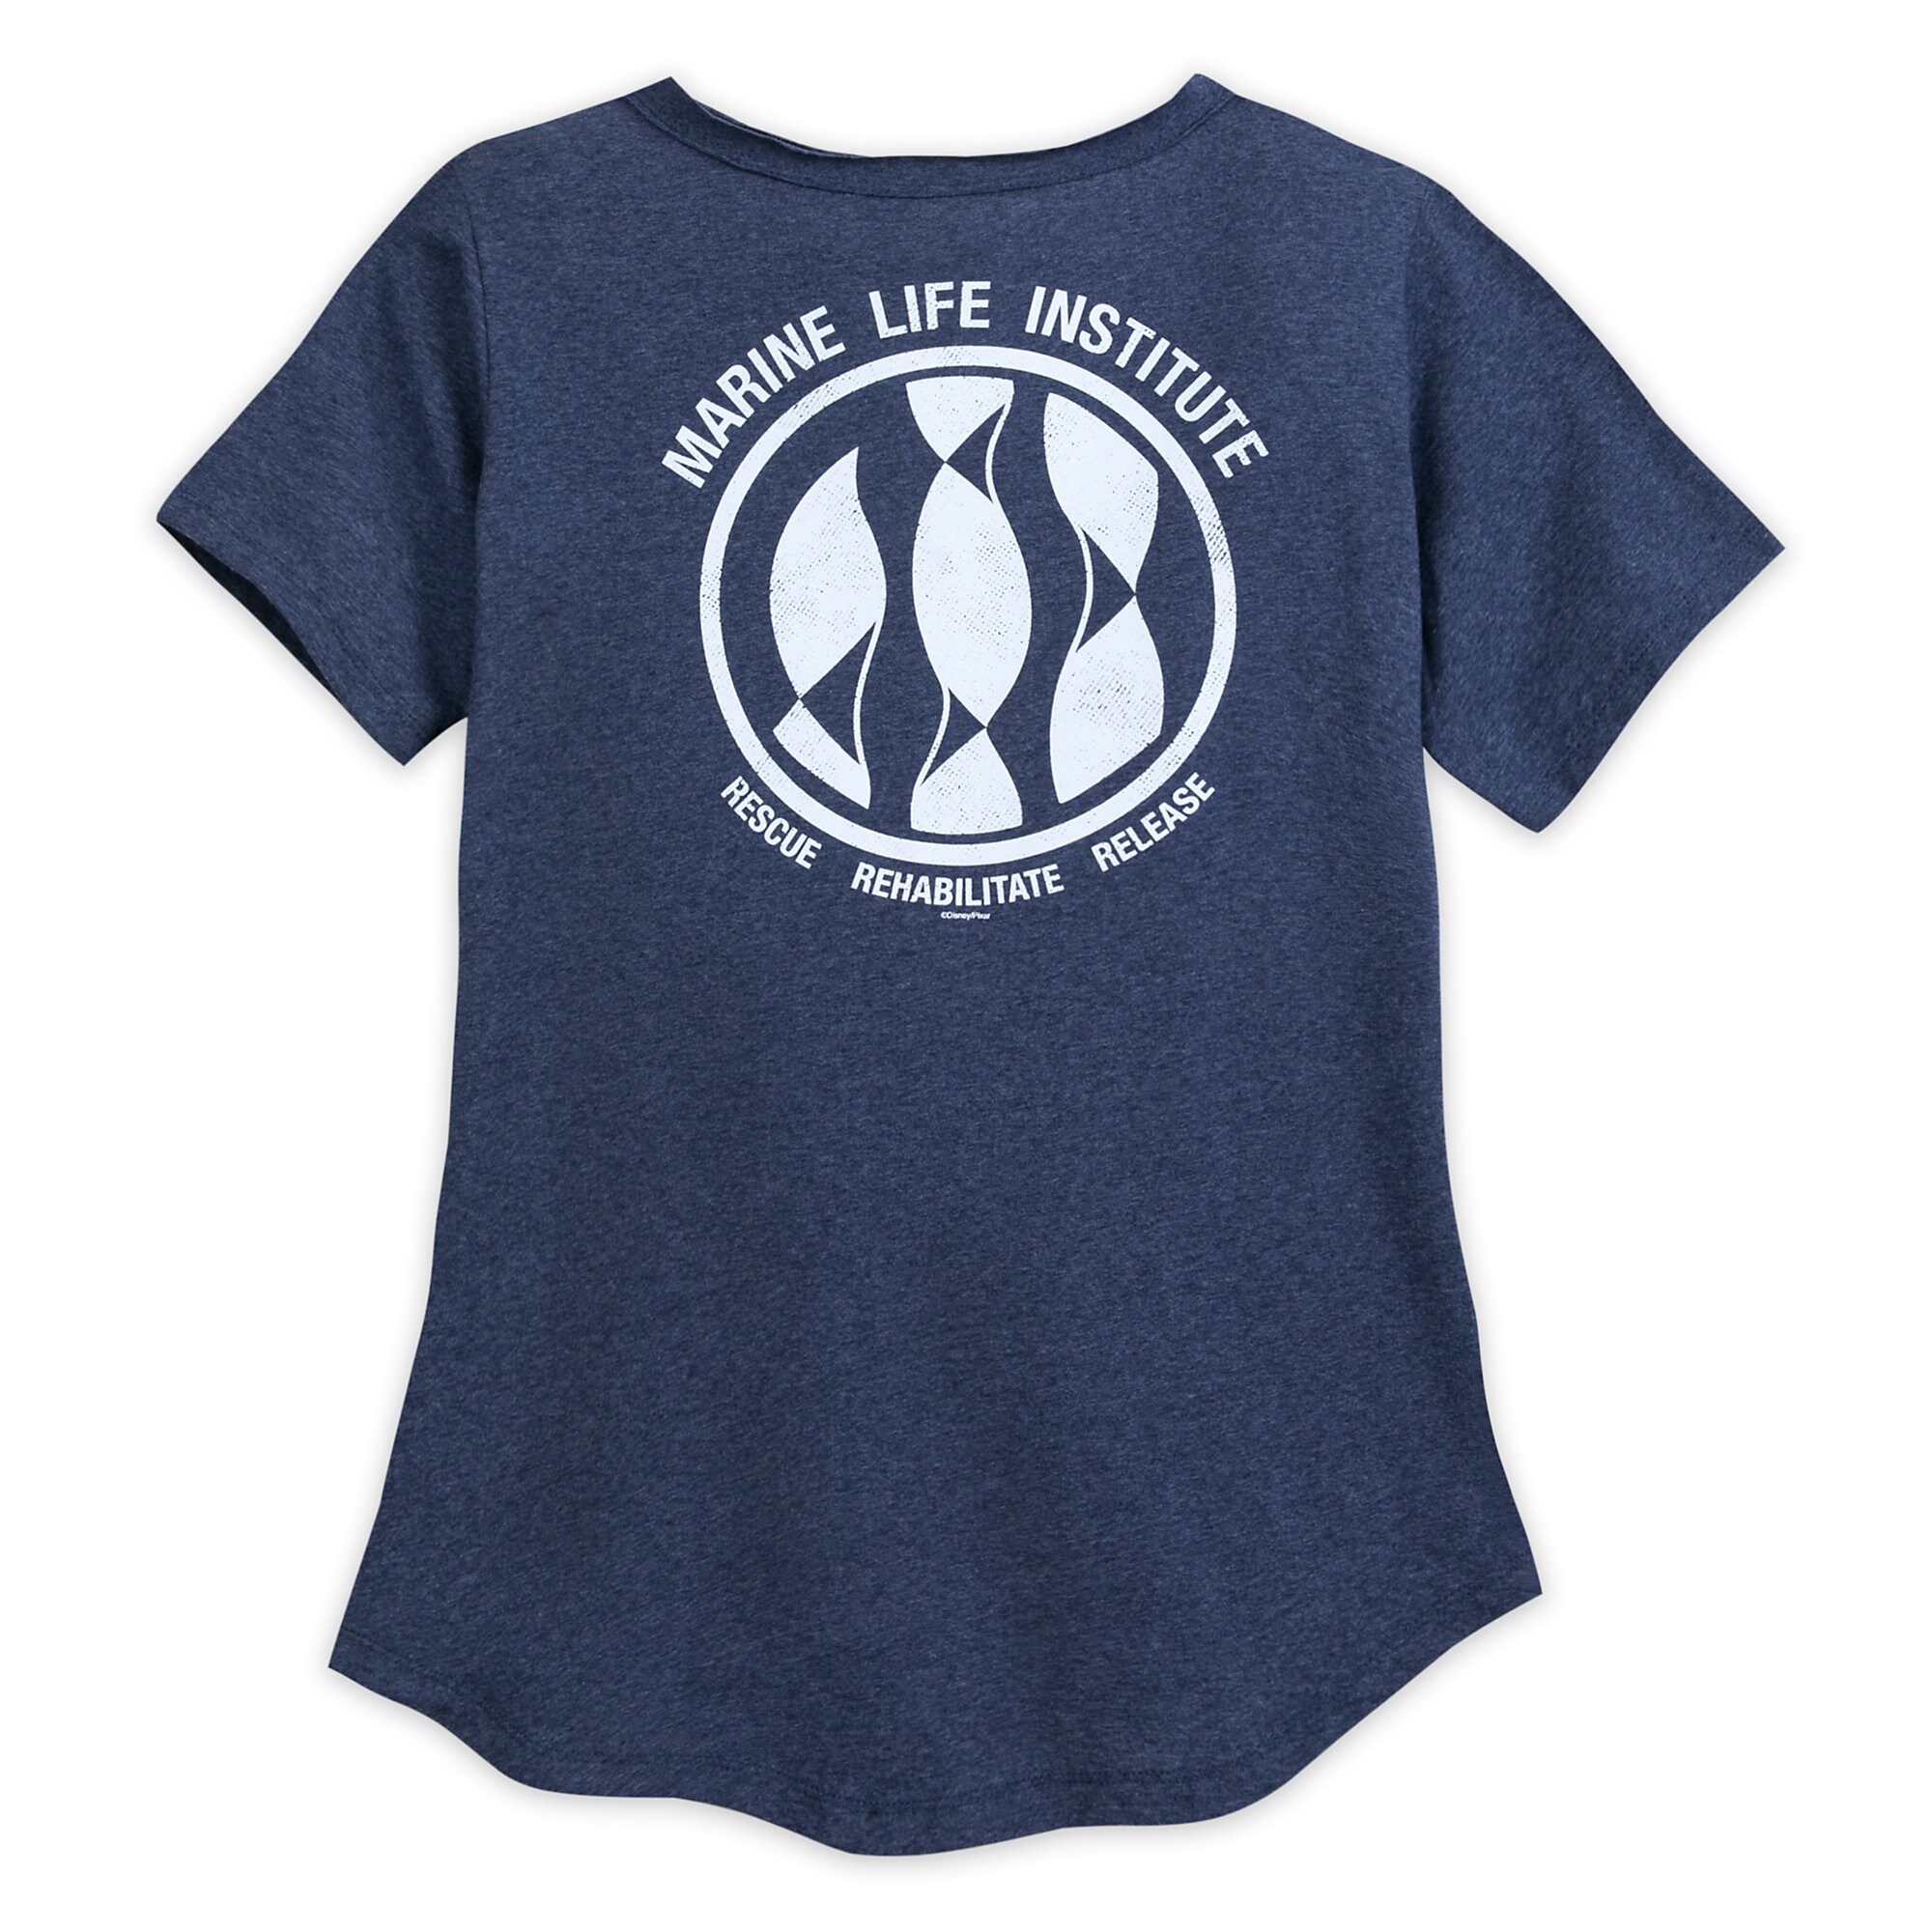 Marine Life Institute T-Shirt for Women - Finding Dory